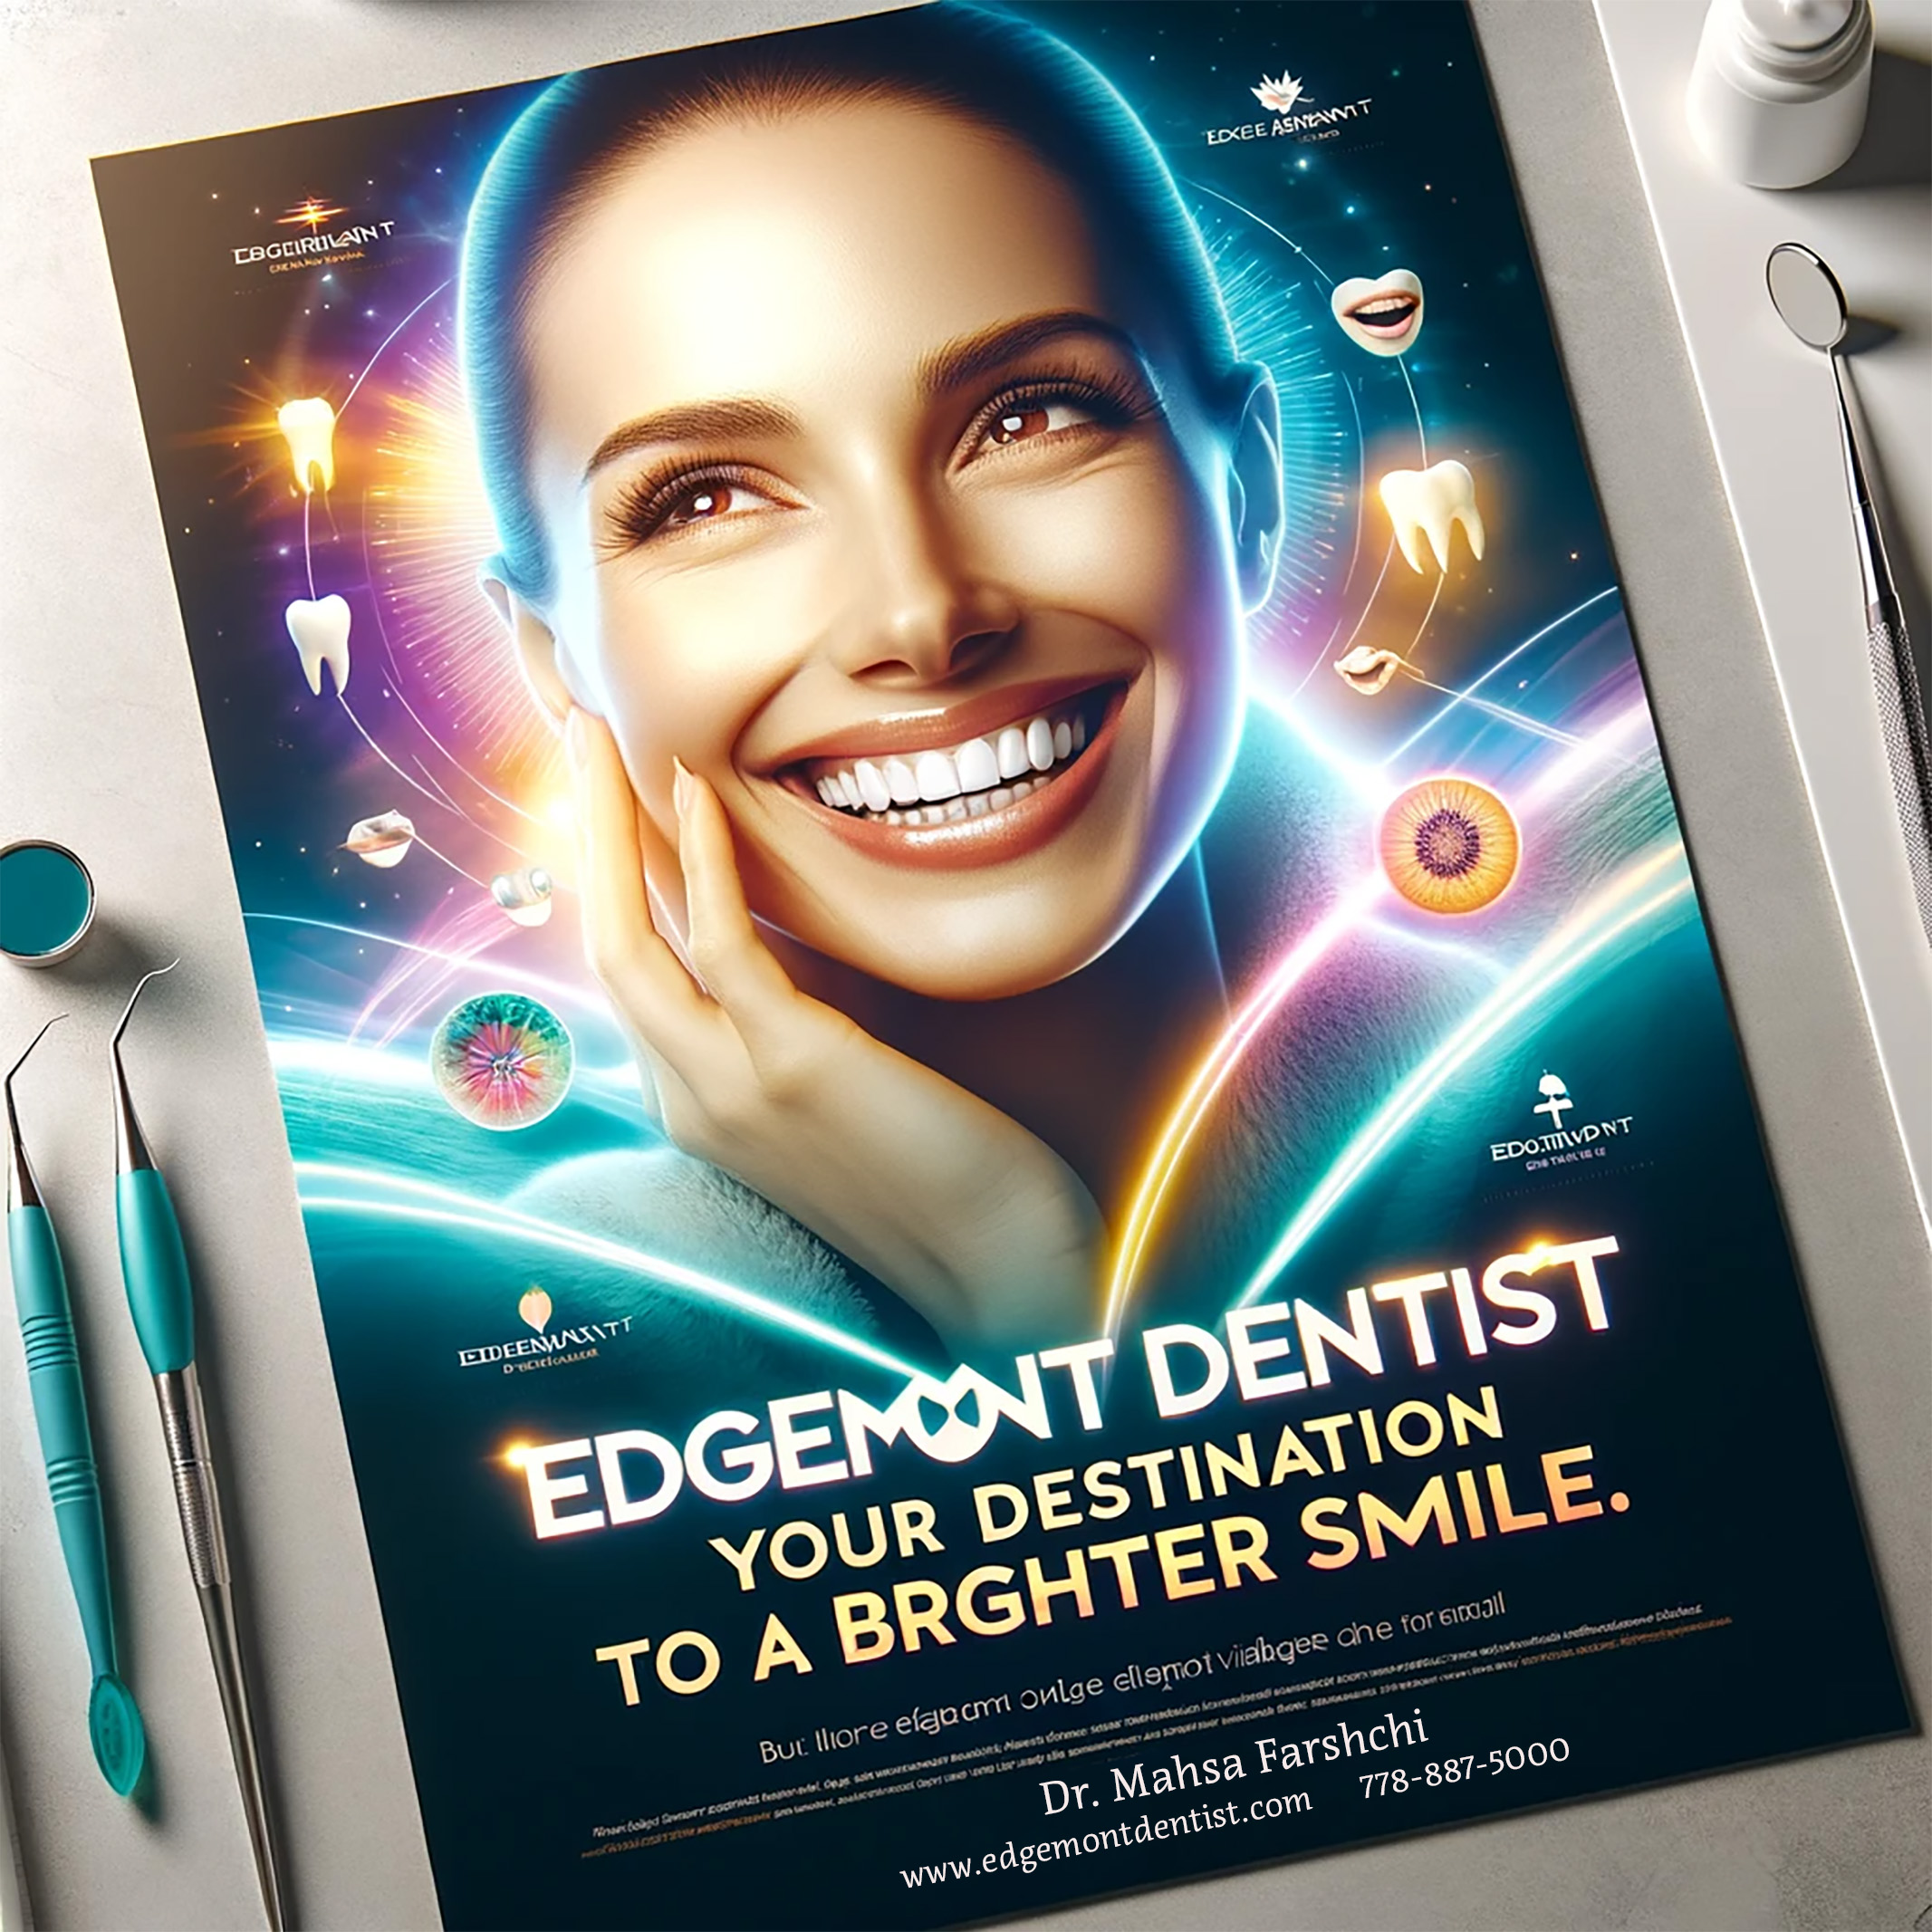 Edgemont Dentist: Your destination to a Brighter Smile